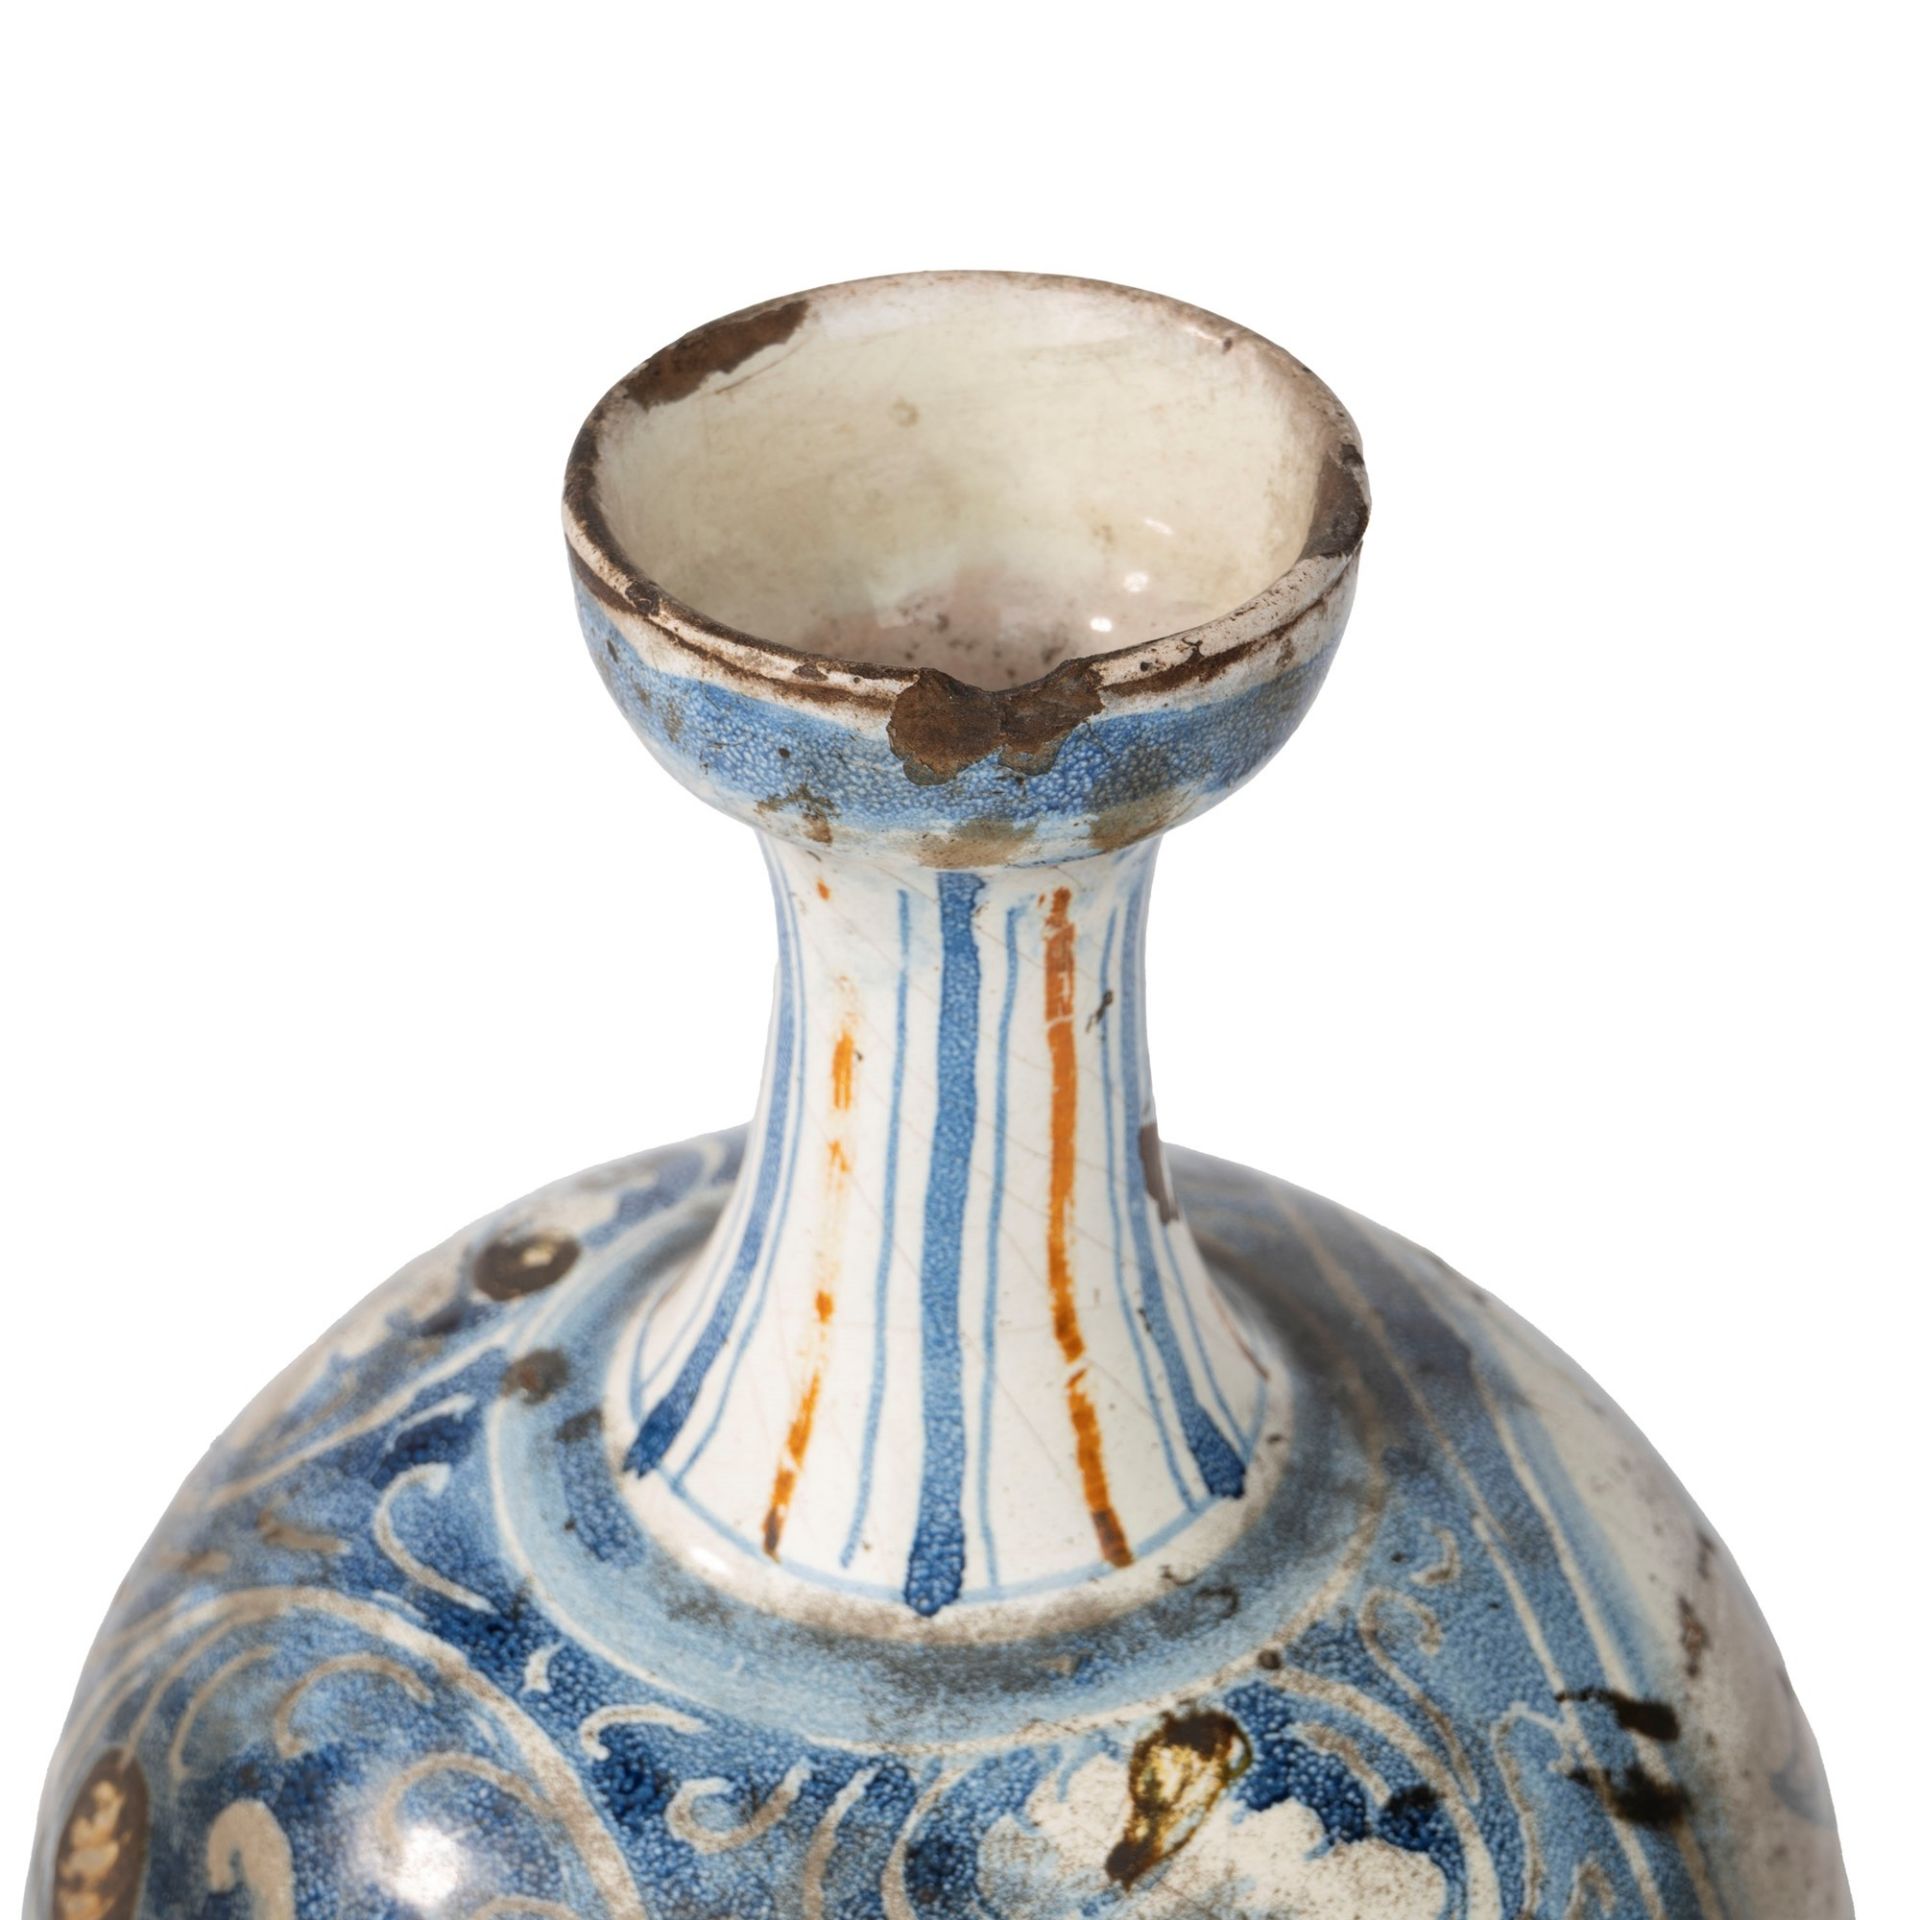 Polychrome majolica bottle, Caltagirone, 17th century - Image 4 of 5